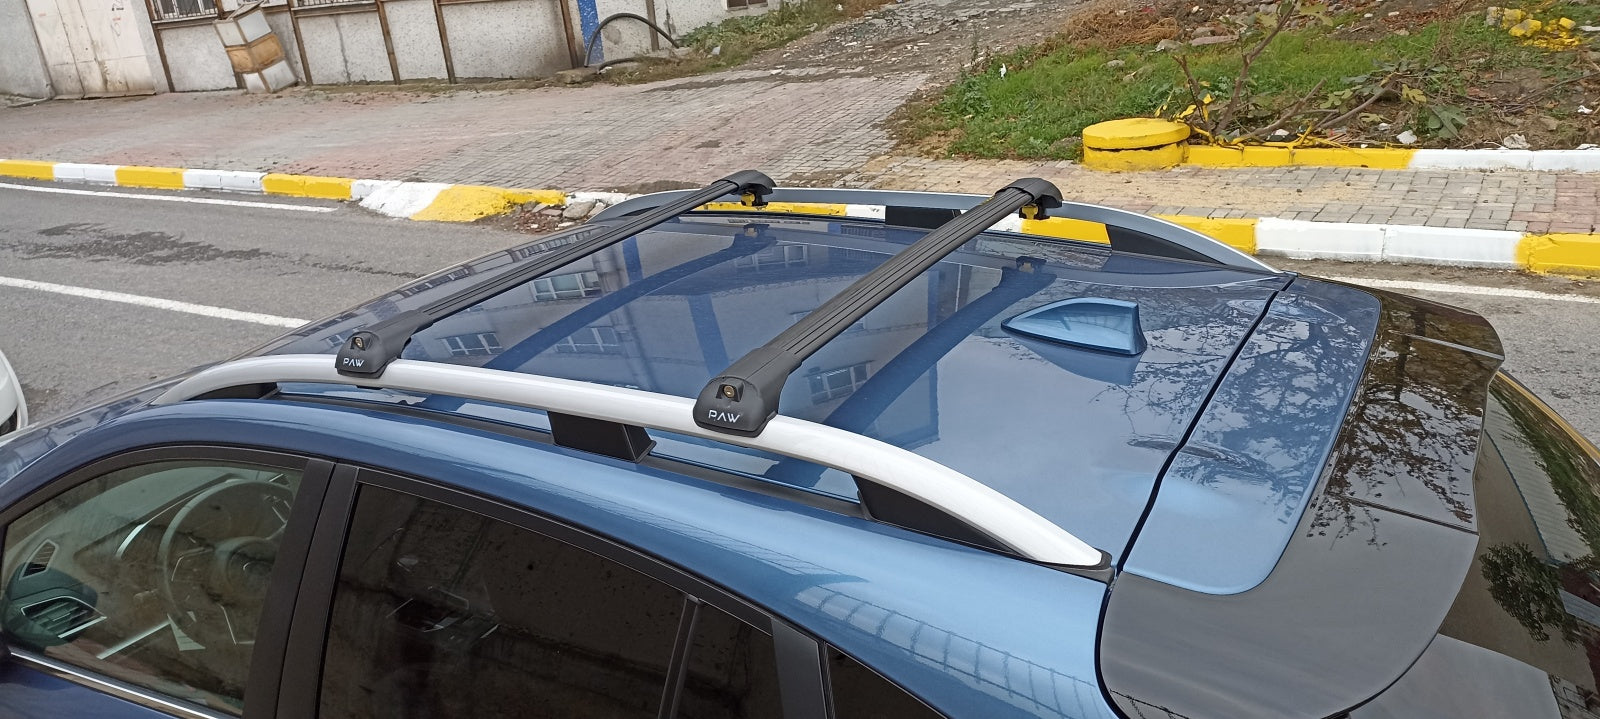 For Dacia Sandero Stepway 2007-2012 Roof Rack System, Aluminium Cross Bar, Metal Bracket, Lockable, Black